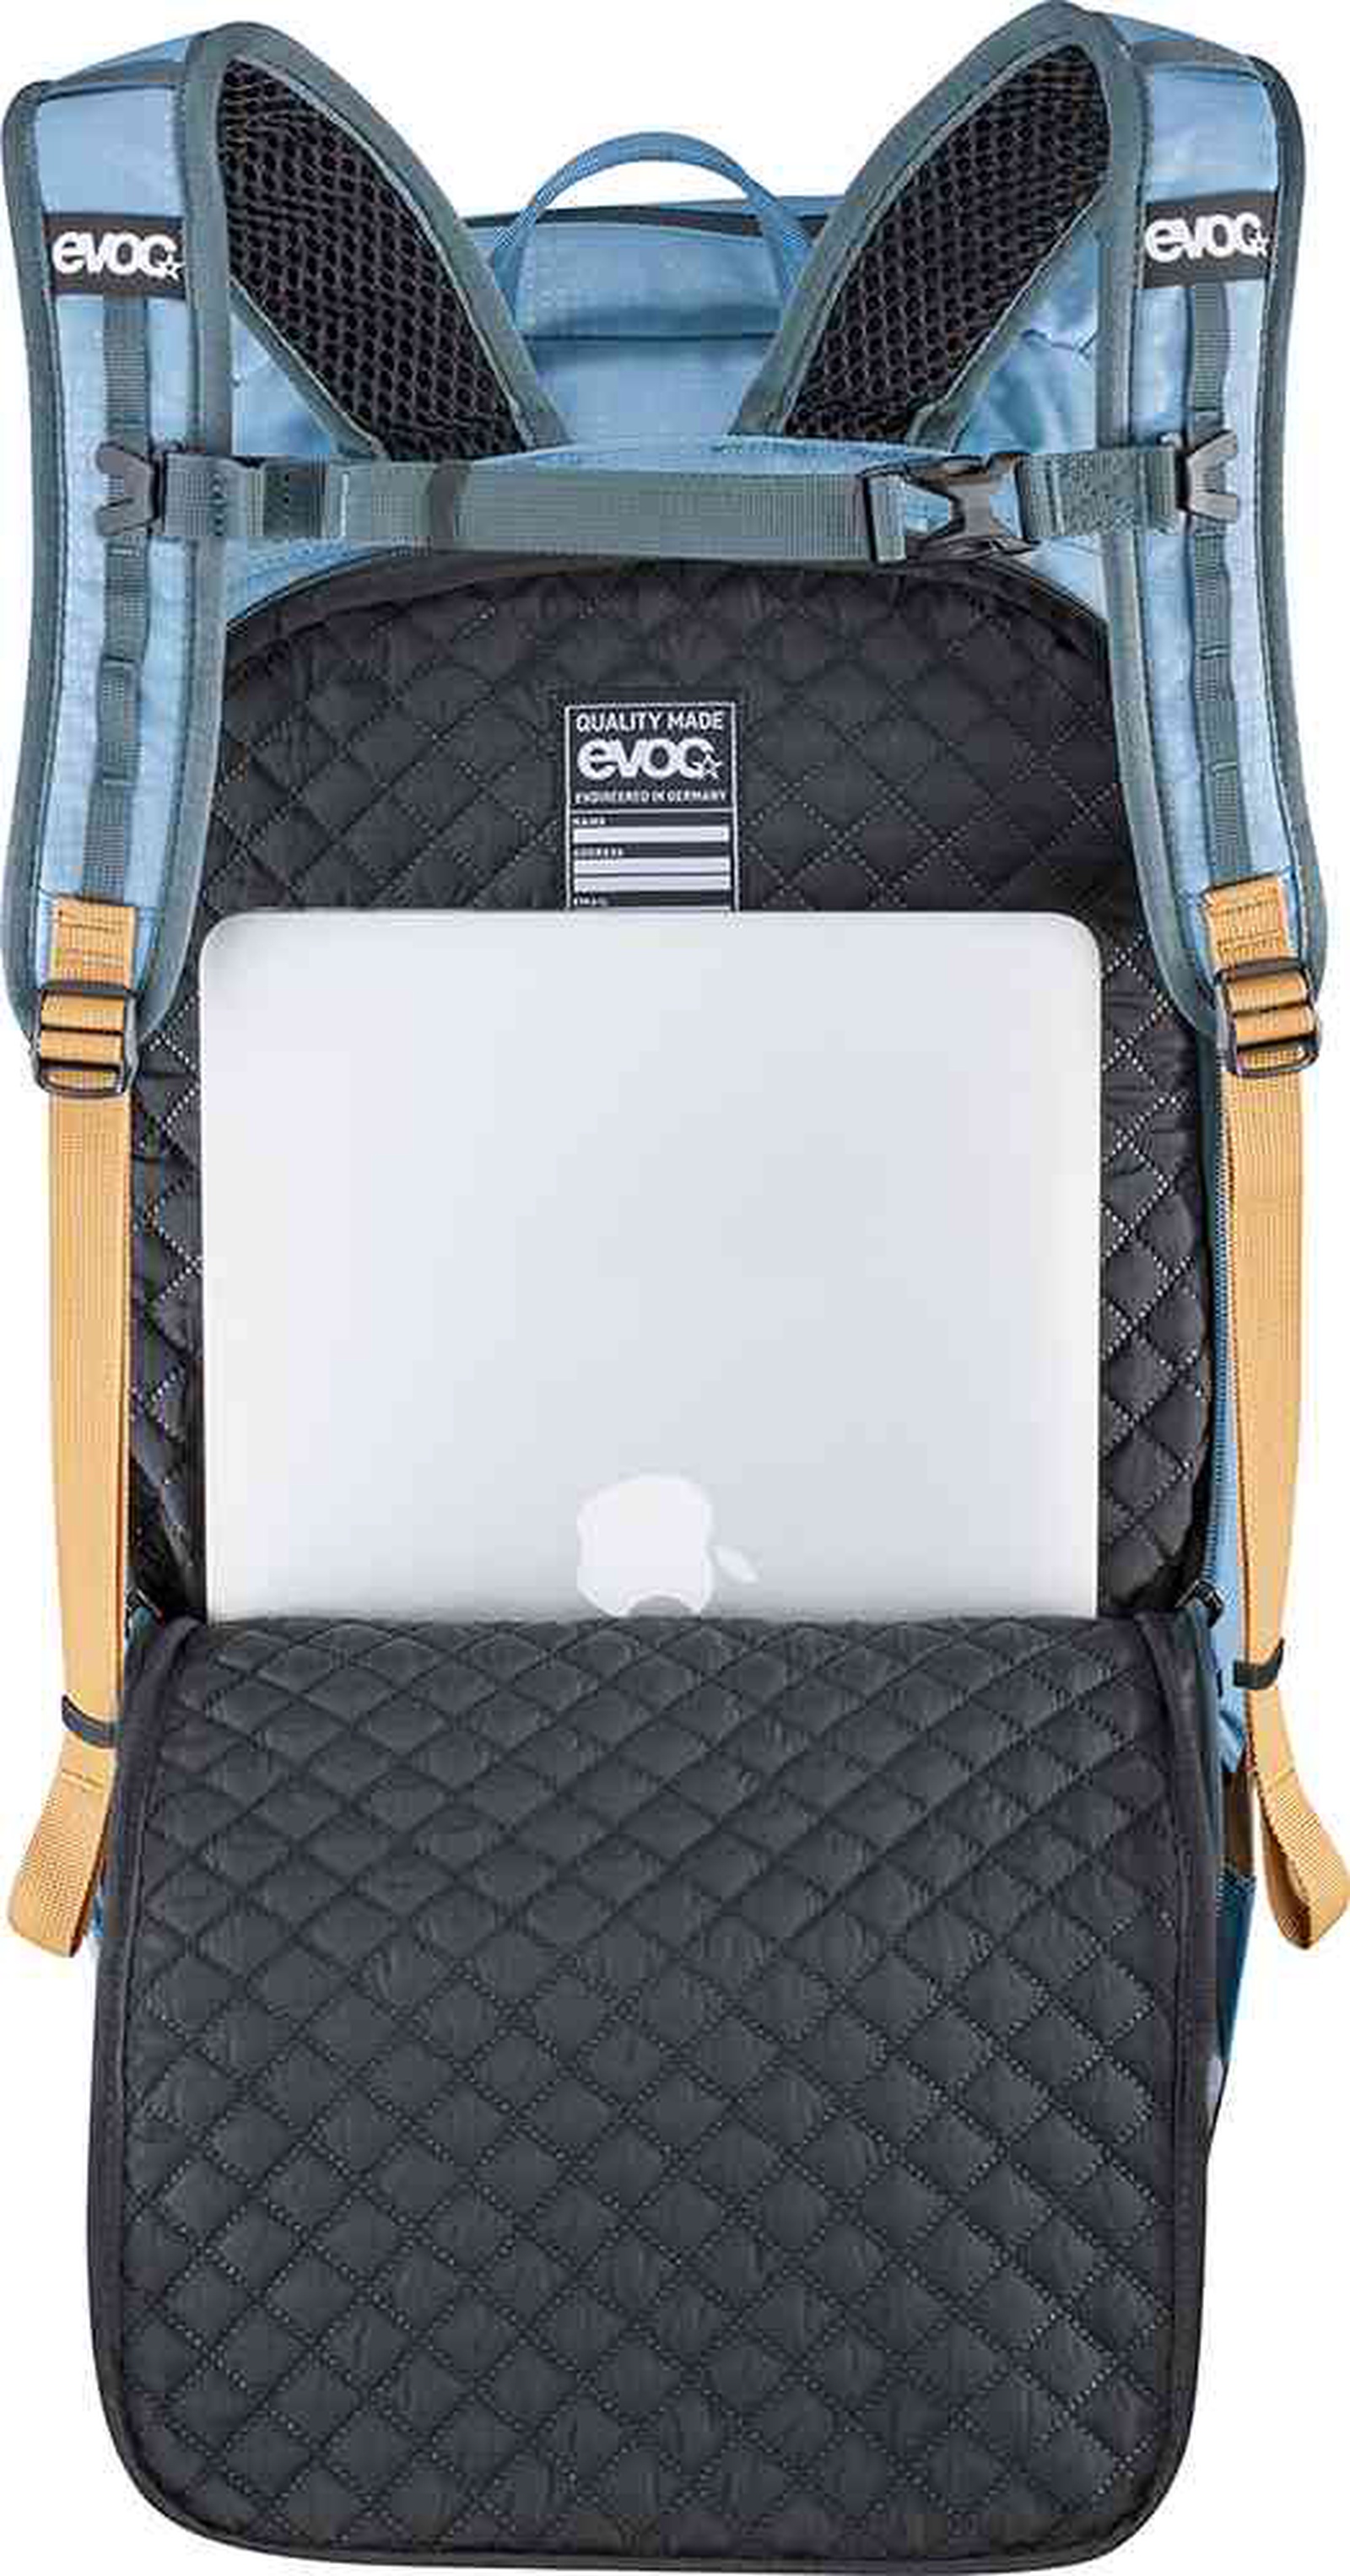 Mission Pro Backpack